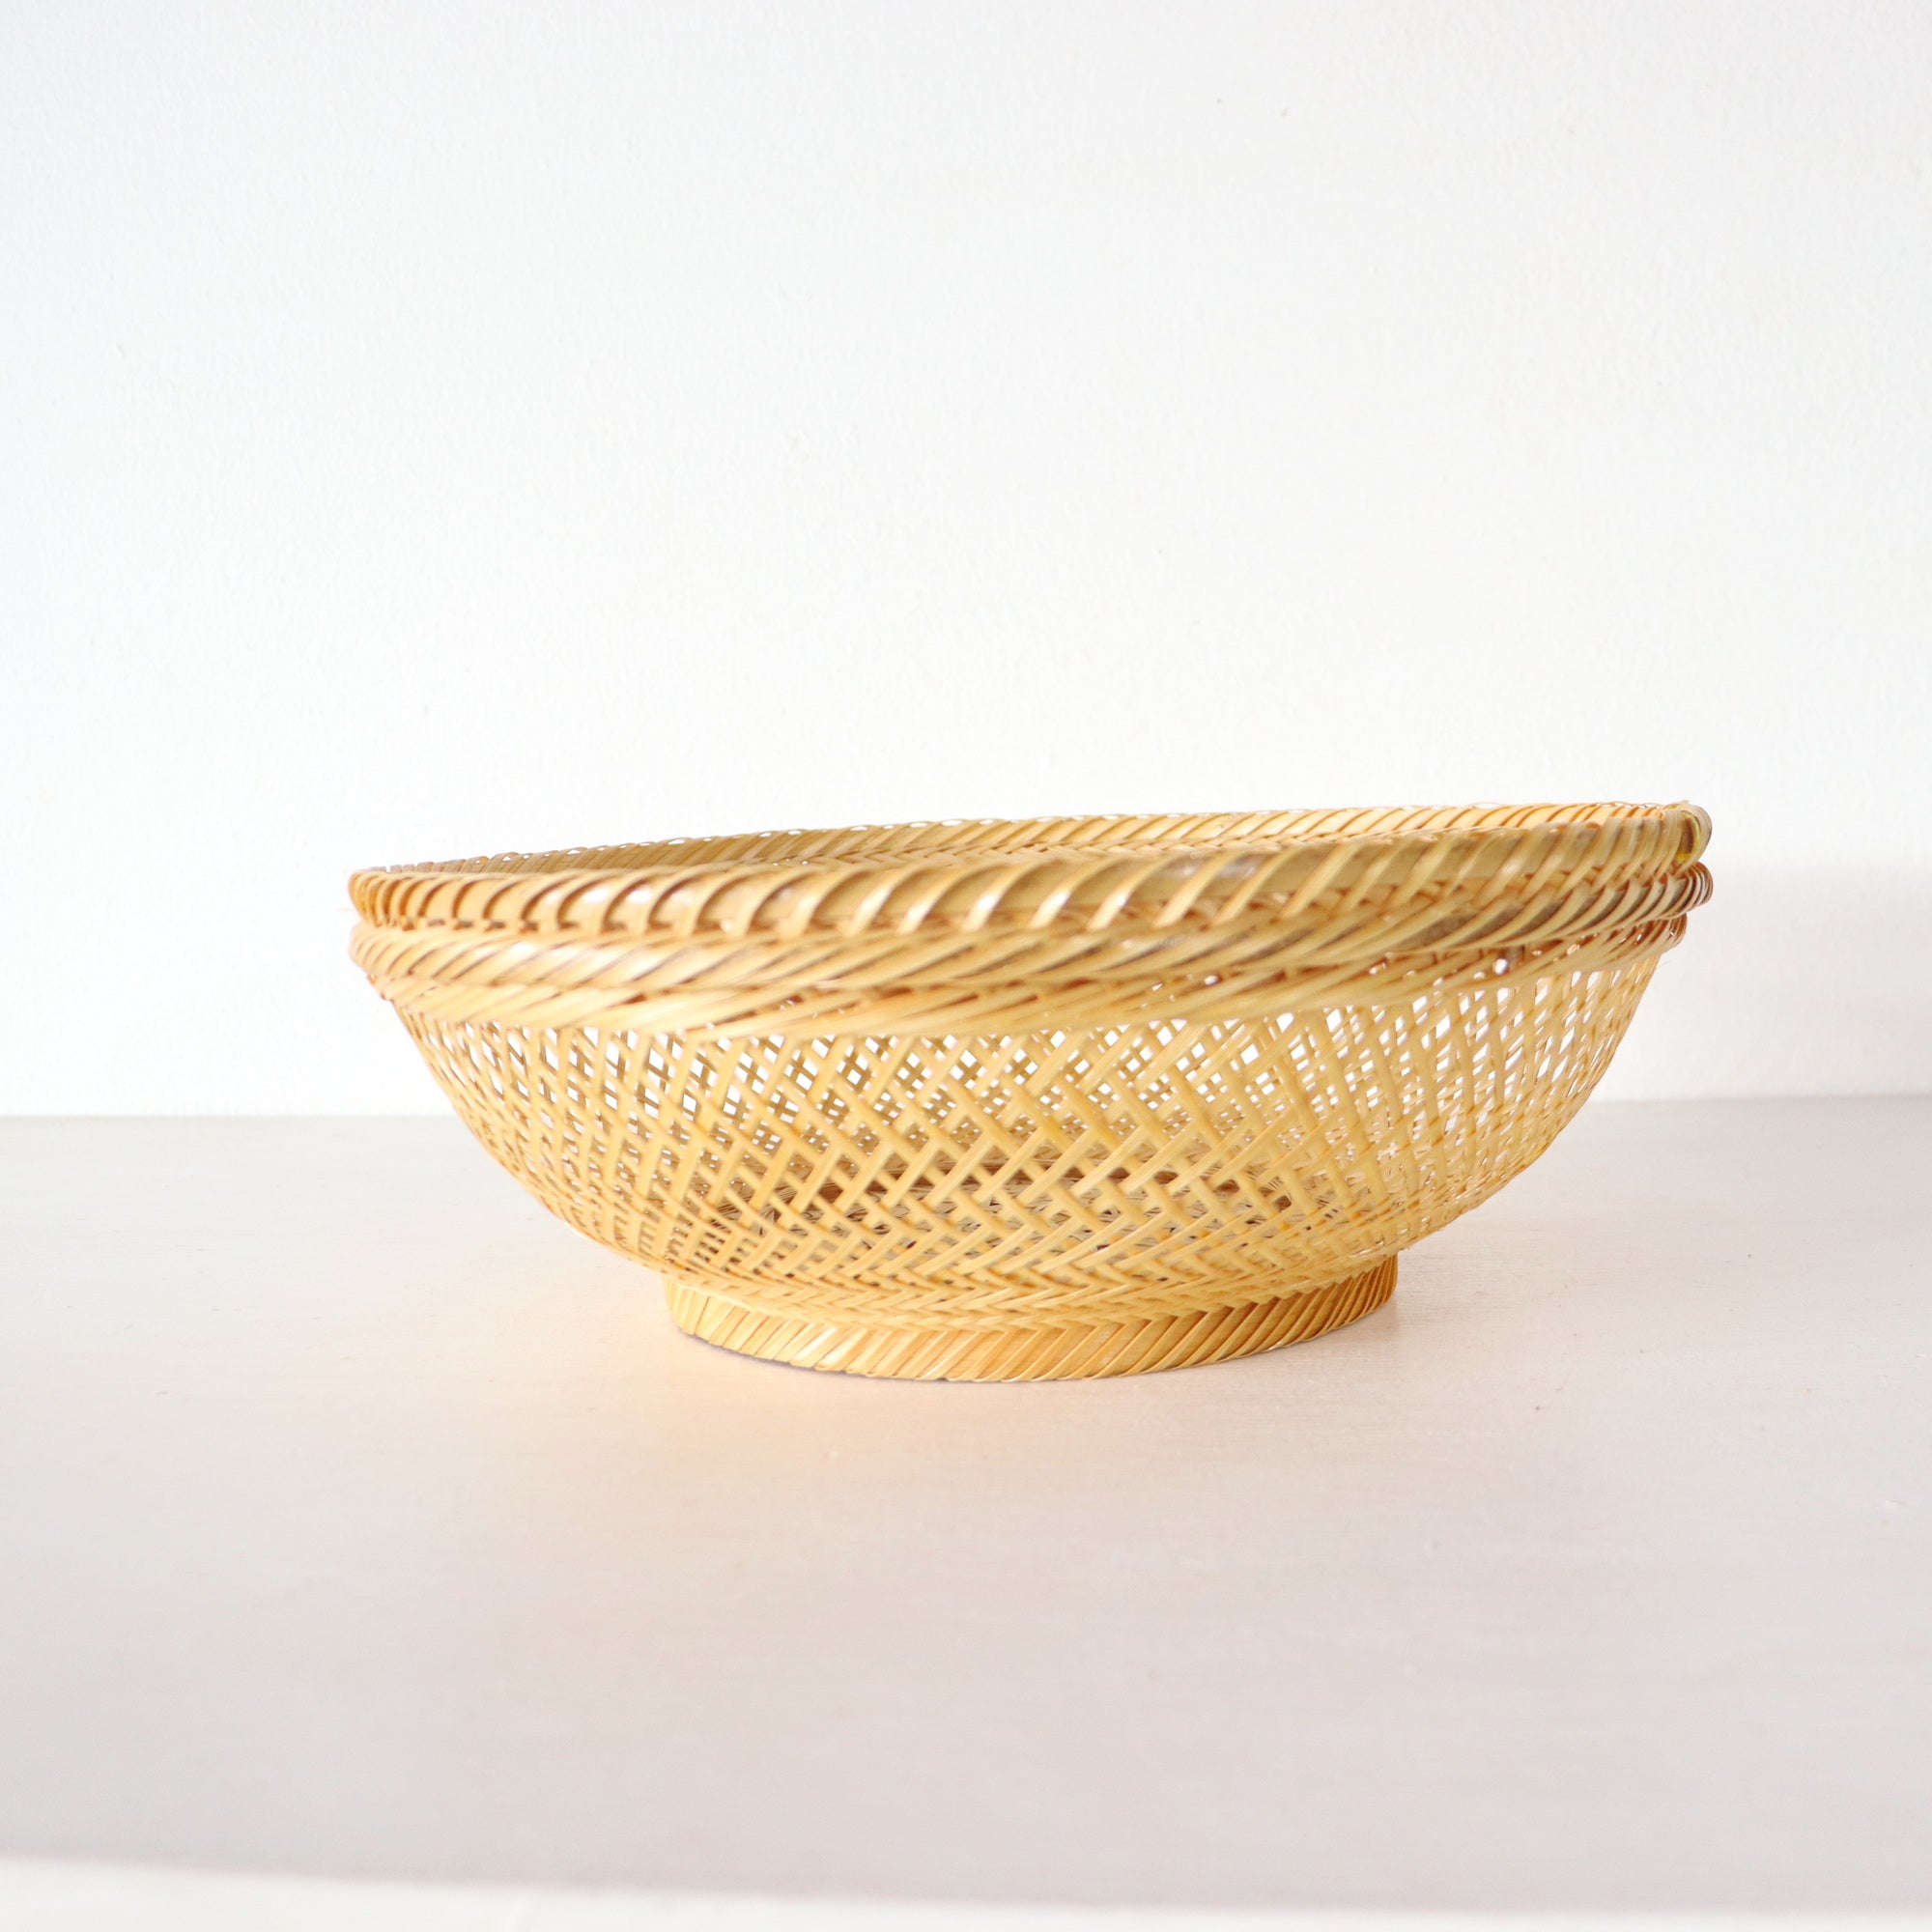 WANTANA- Bamboo Bead Basket